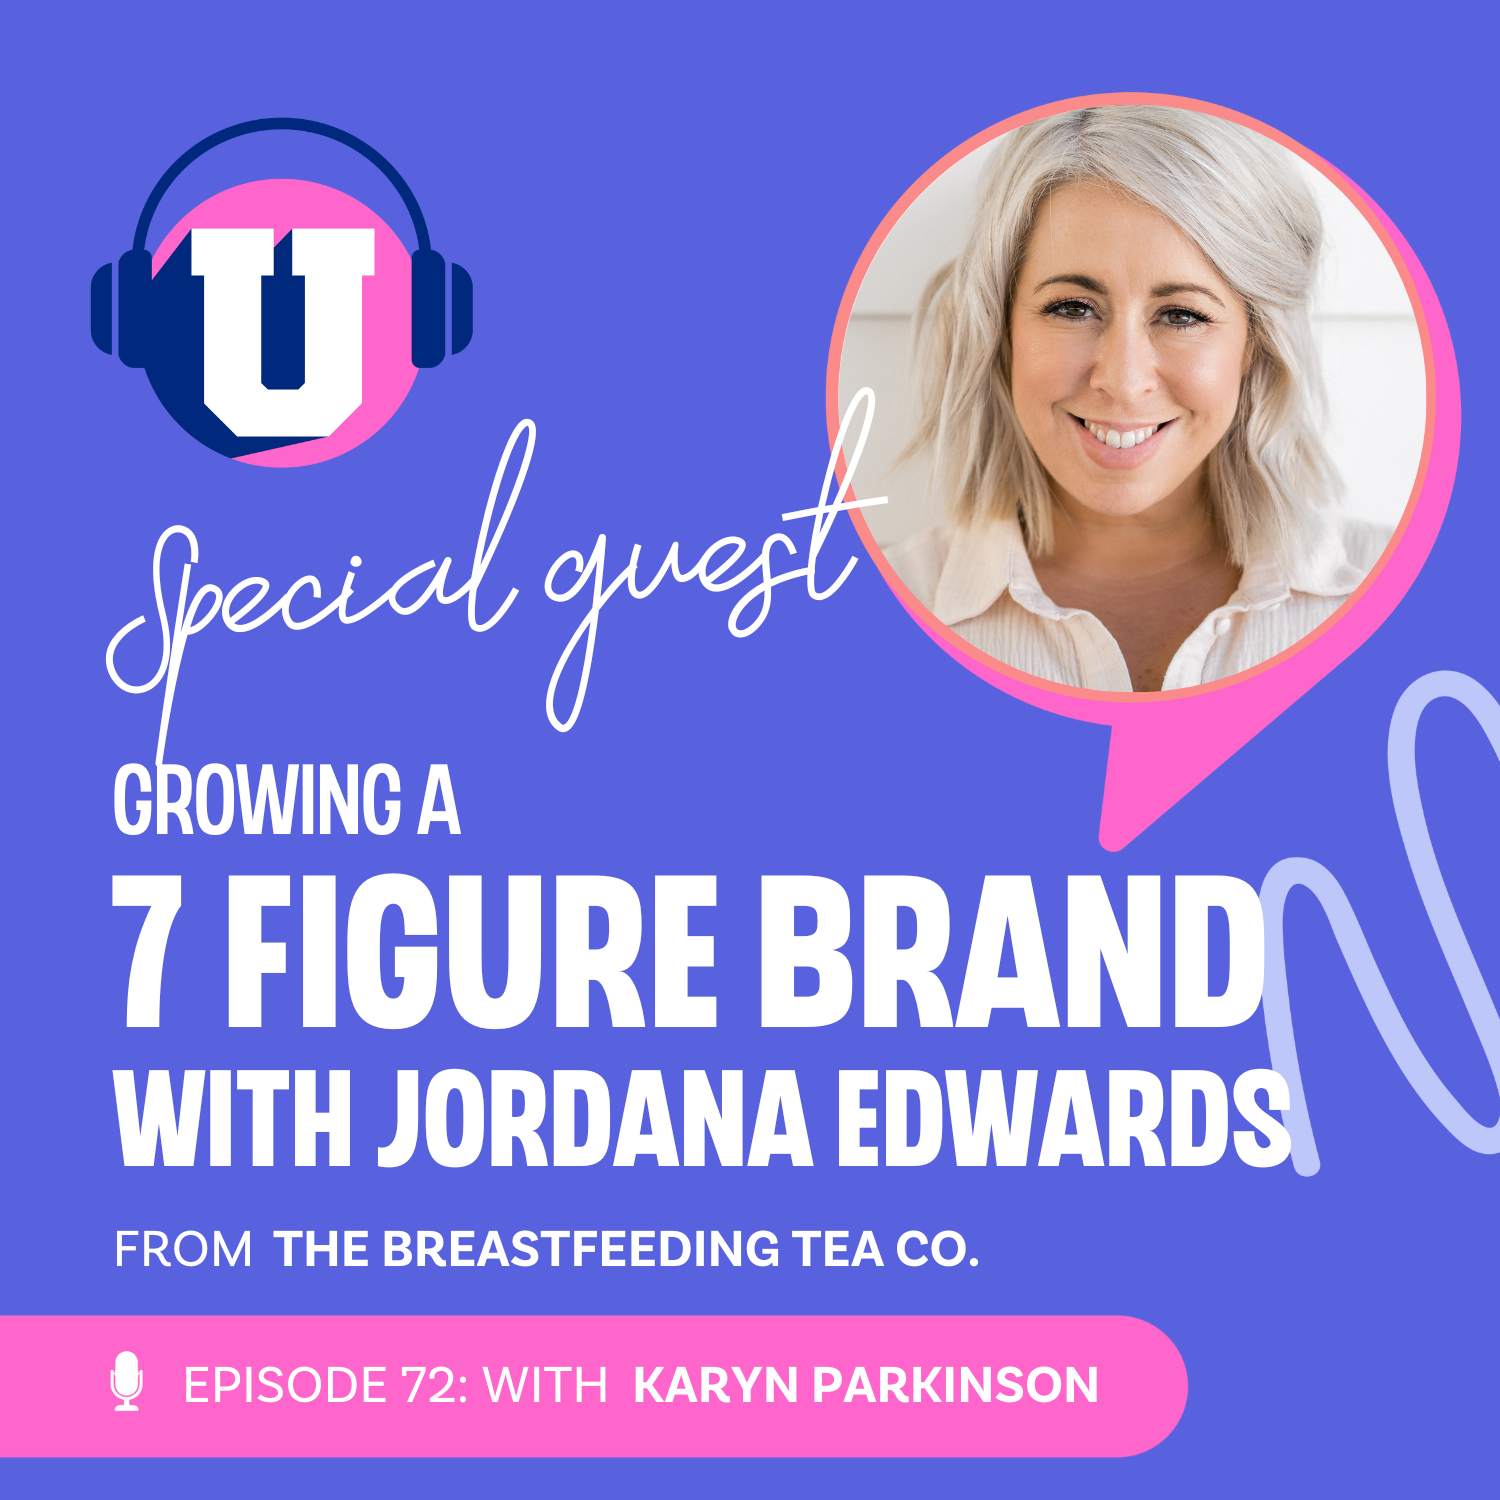 Growing a 7 figure brand with Jordana Edwards